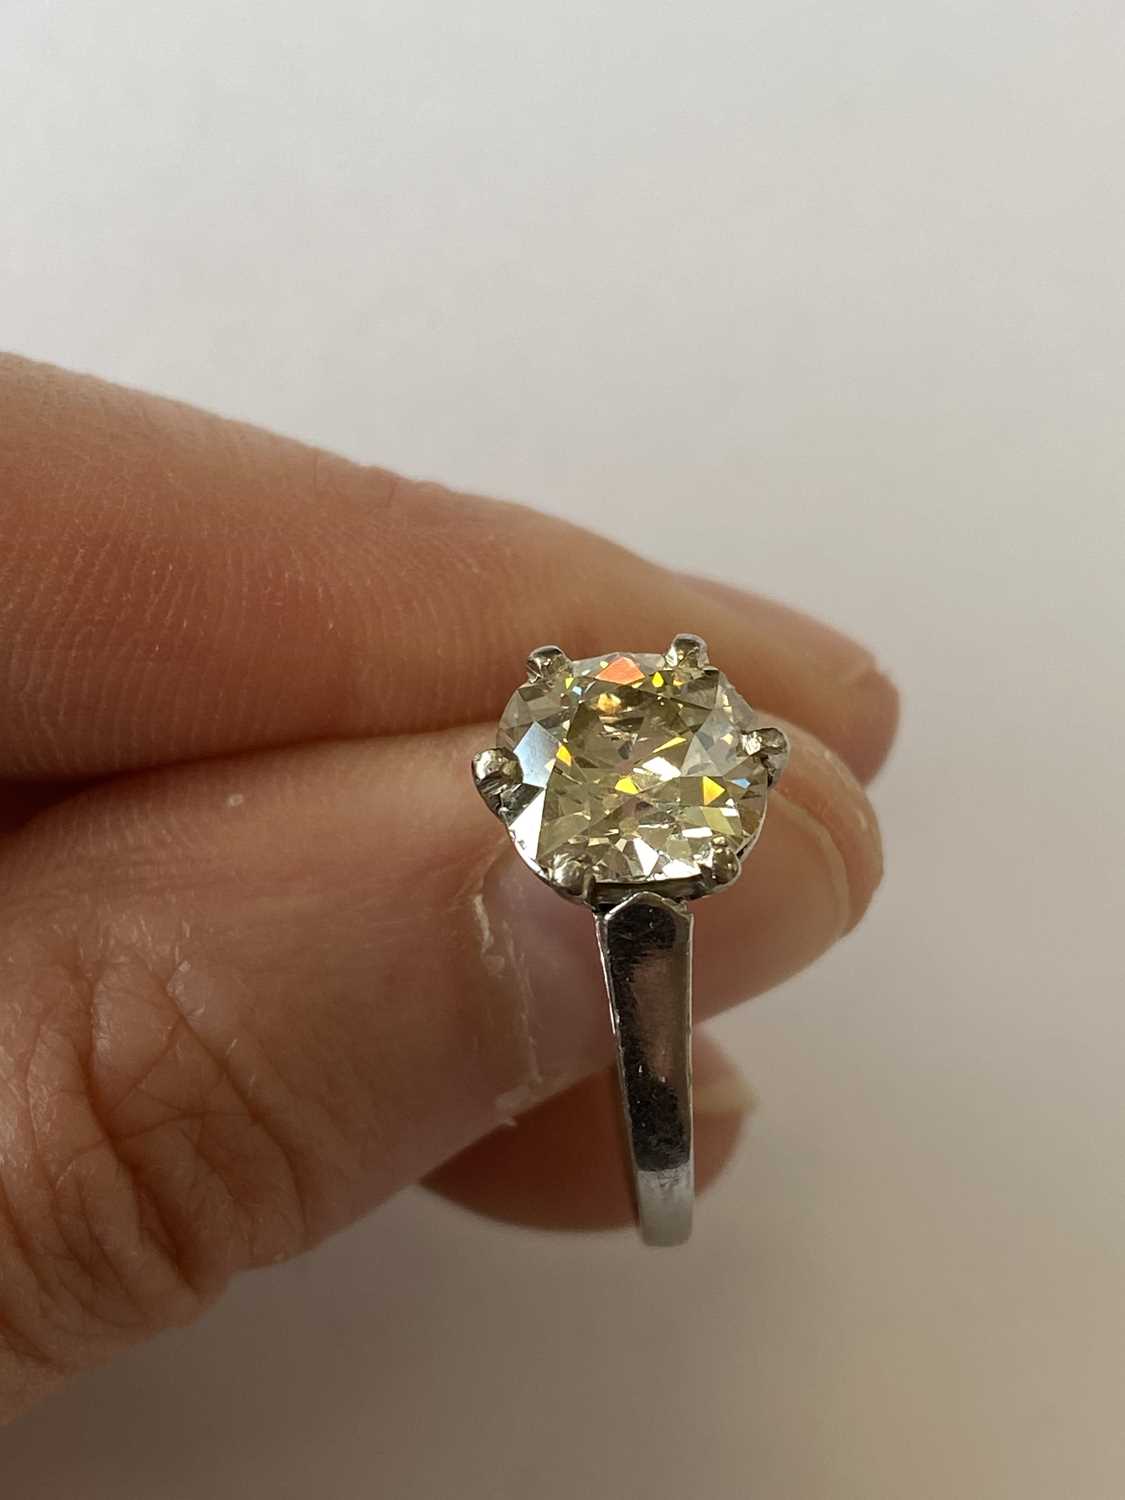 An early 20th century single stone diamond ring - Image 3 of 14